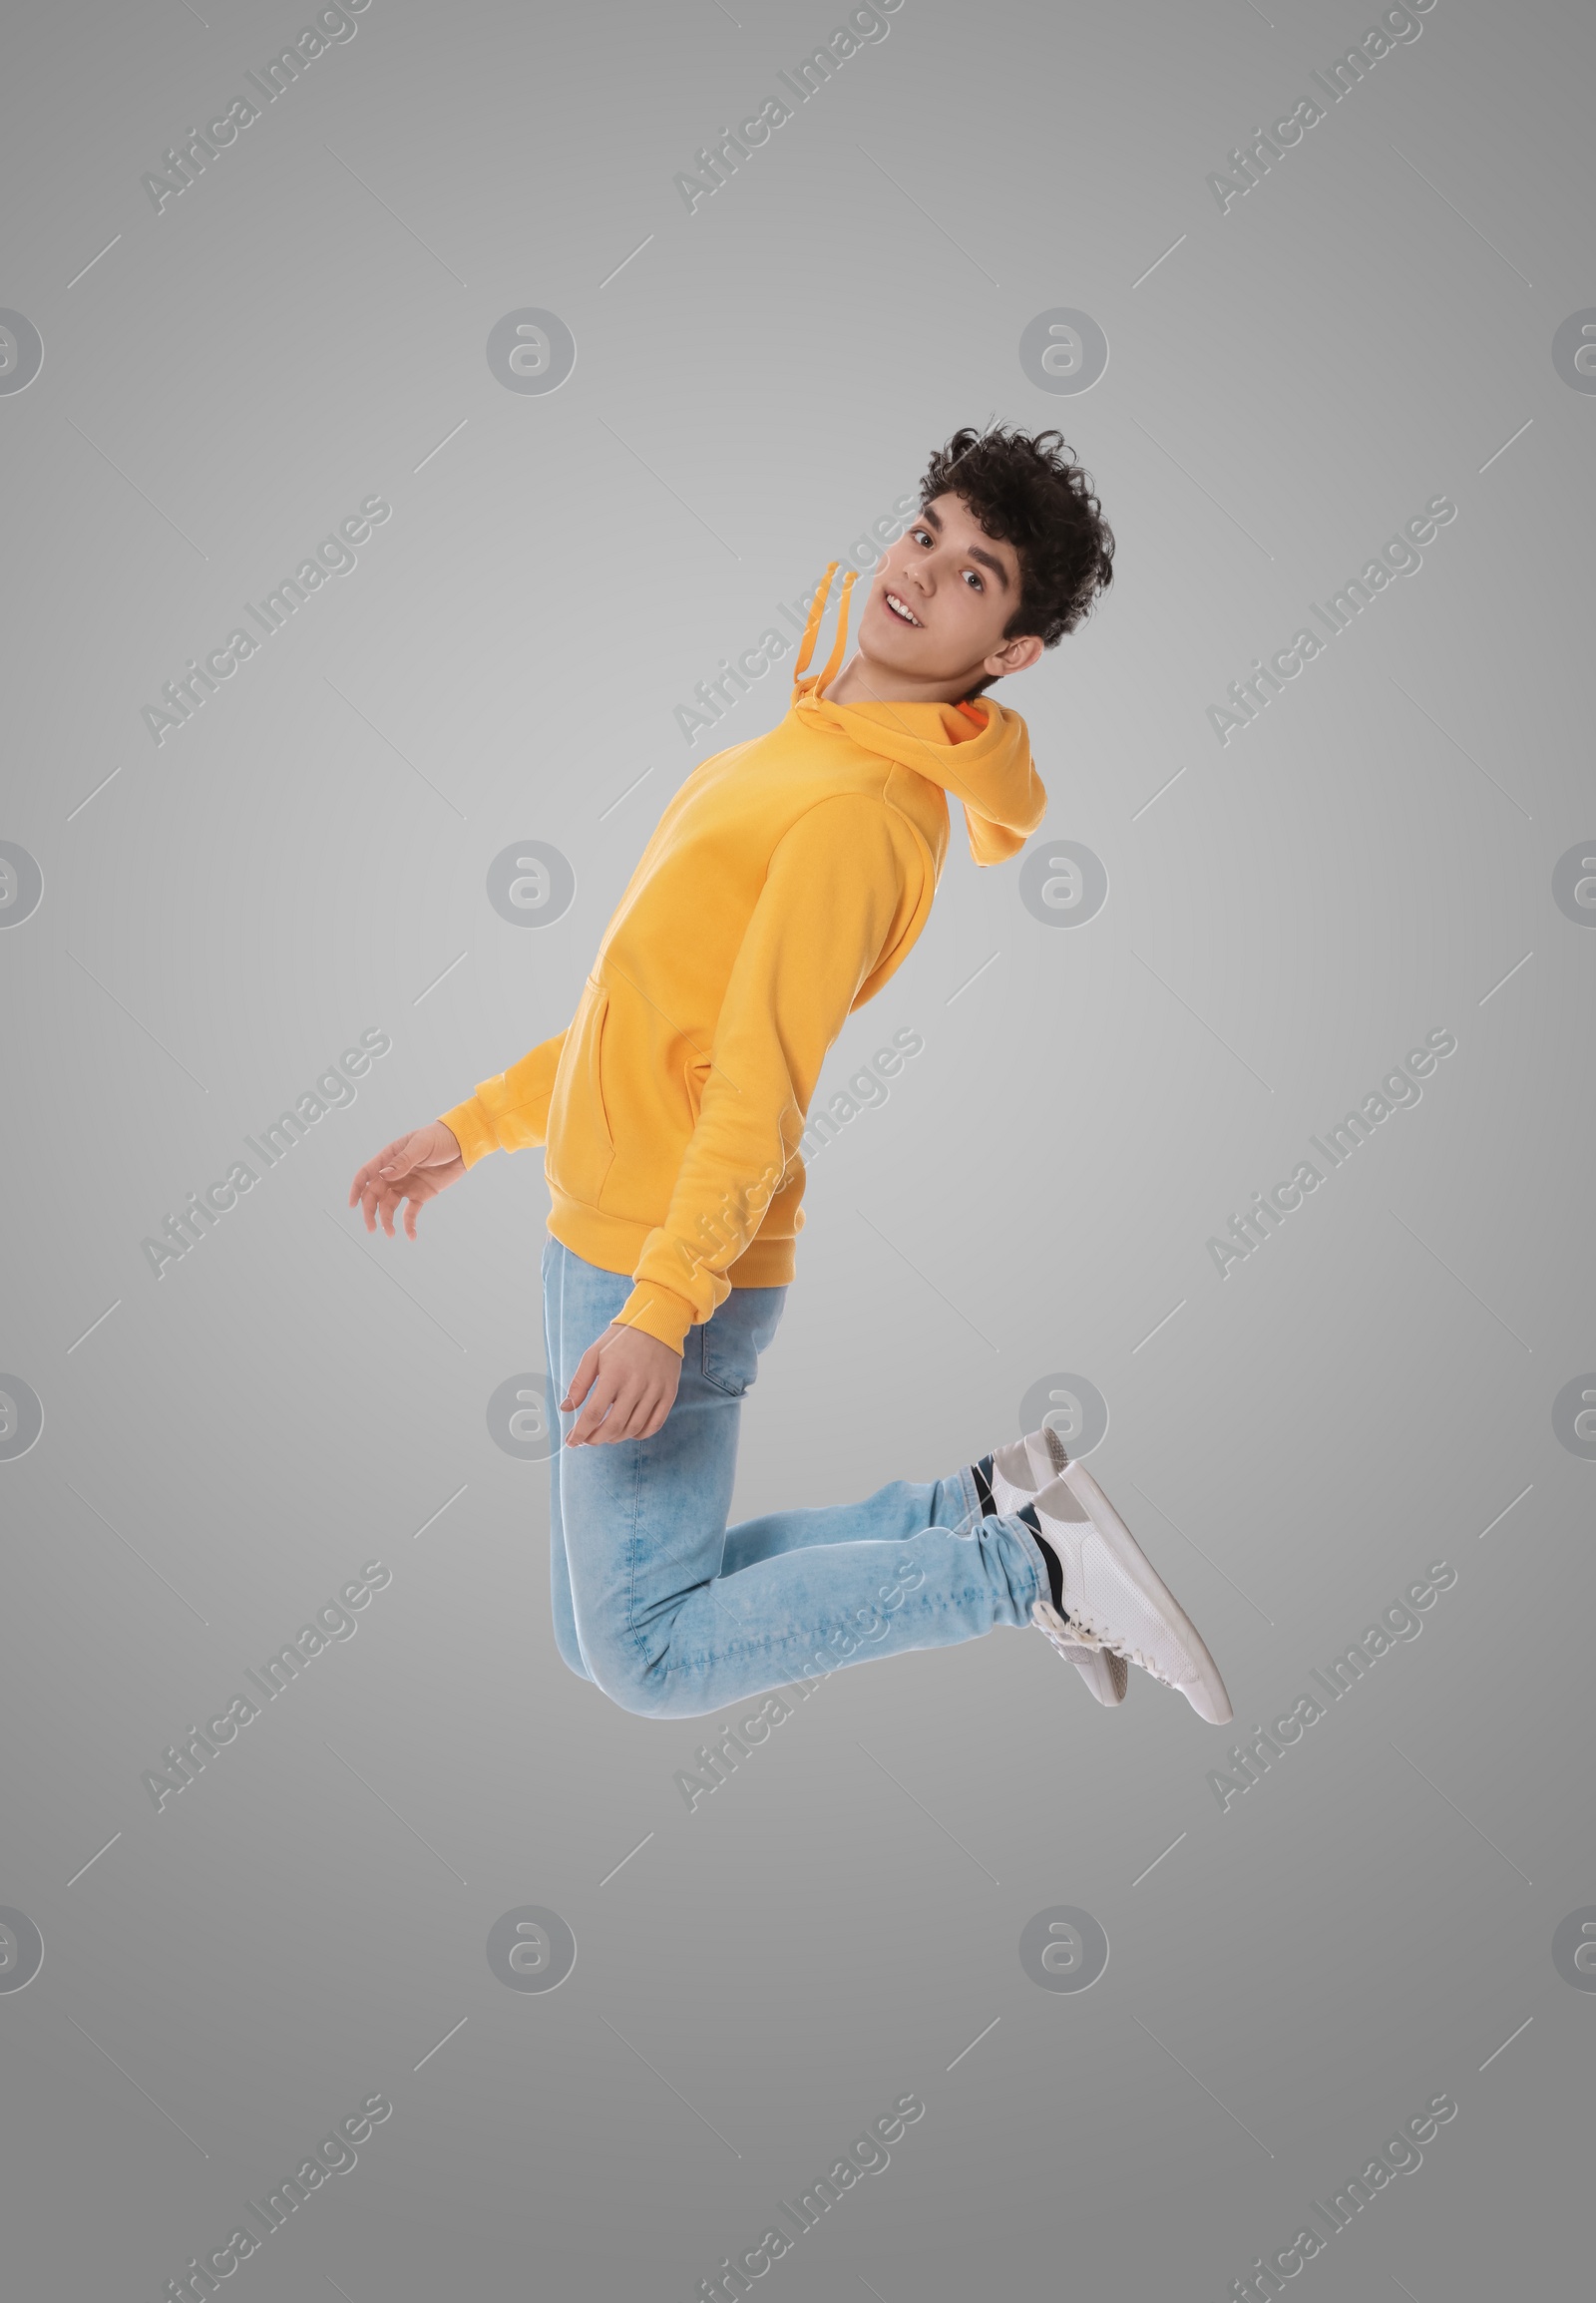 Image of Teenage boy jumping on grey background, full length portrait